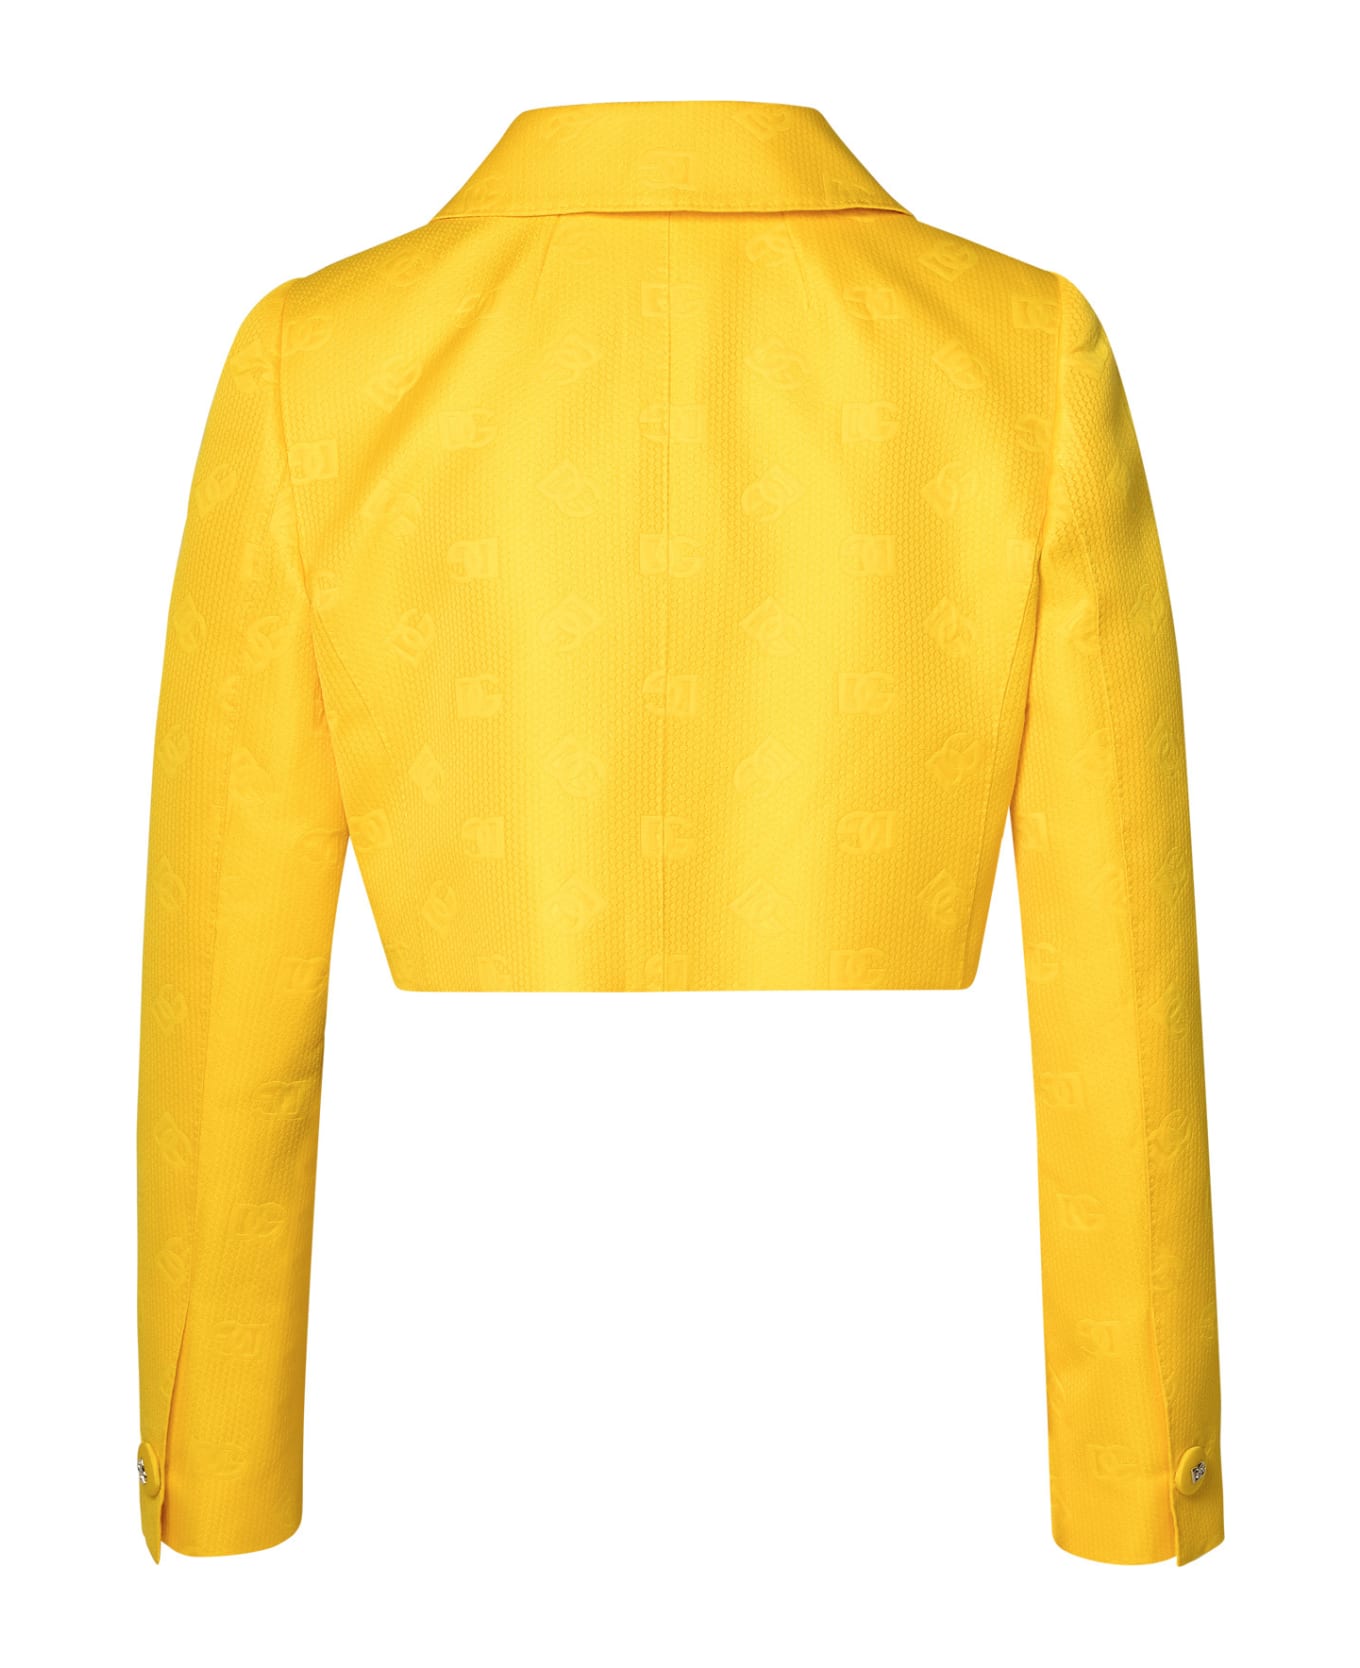 Dolce & Gabbana Yellow Cotton Blend Jacket - Yellow